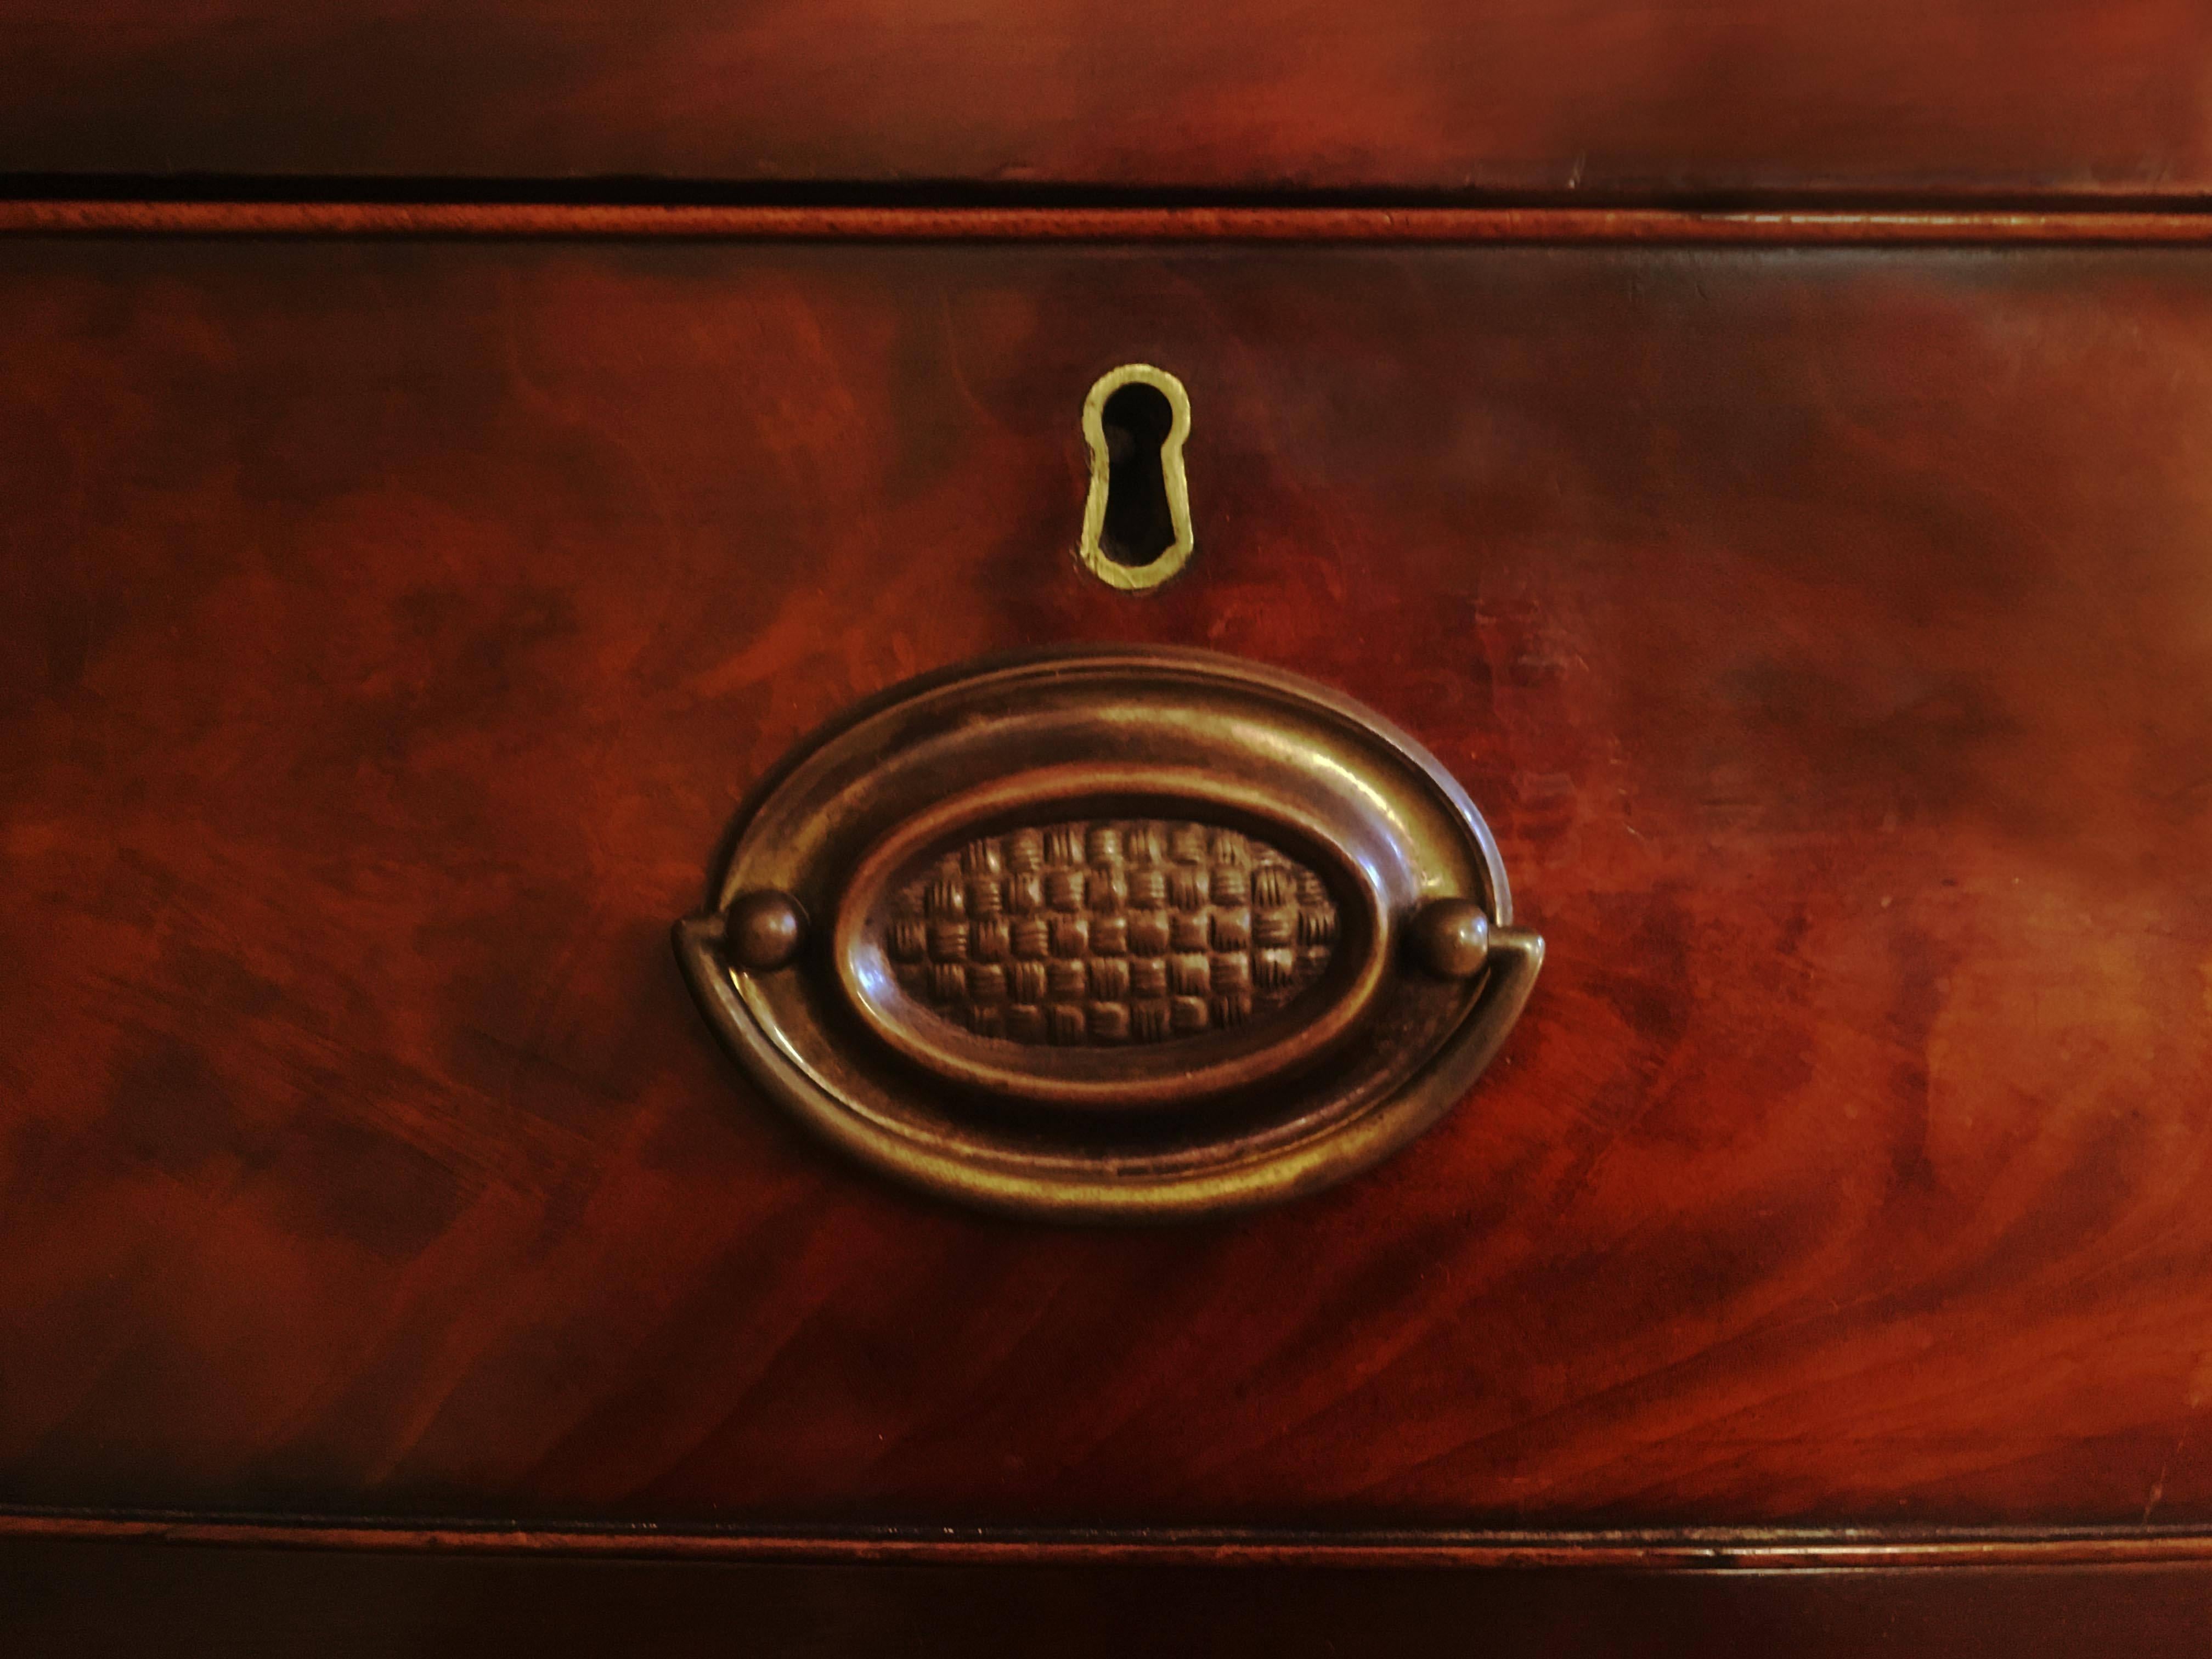 flame mahogany dresser